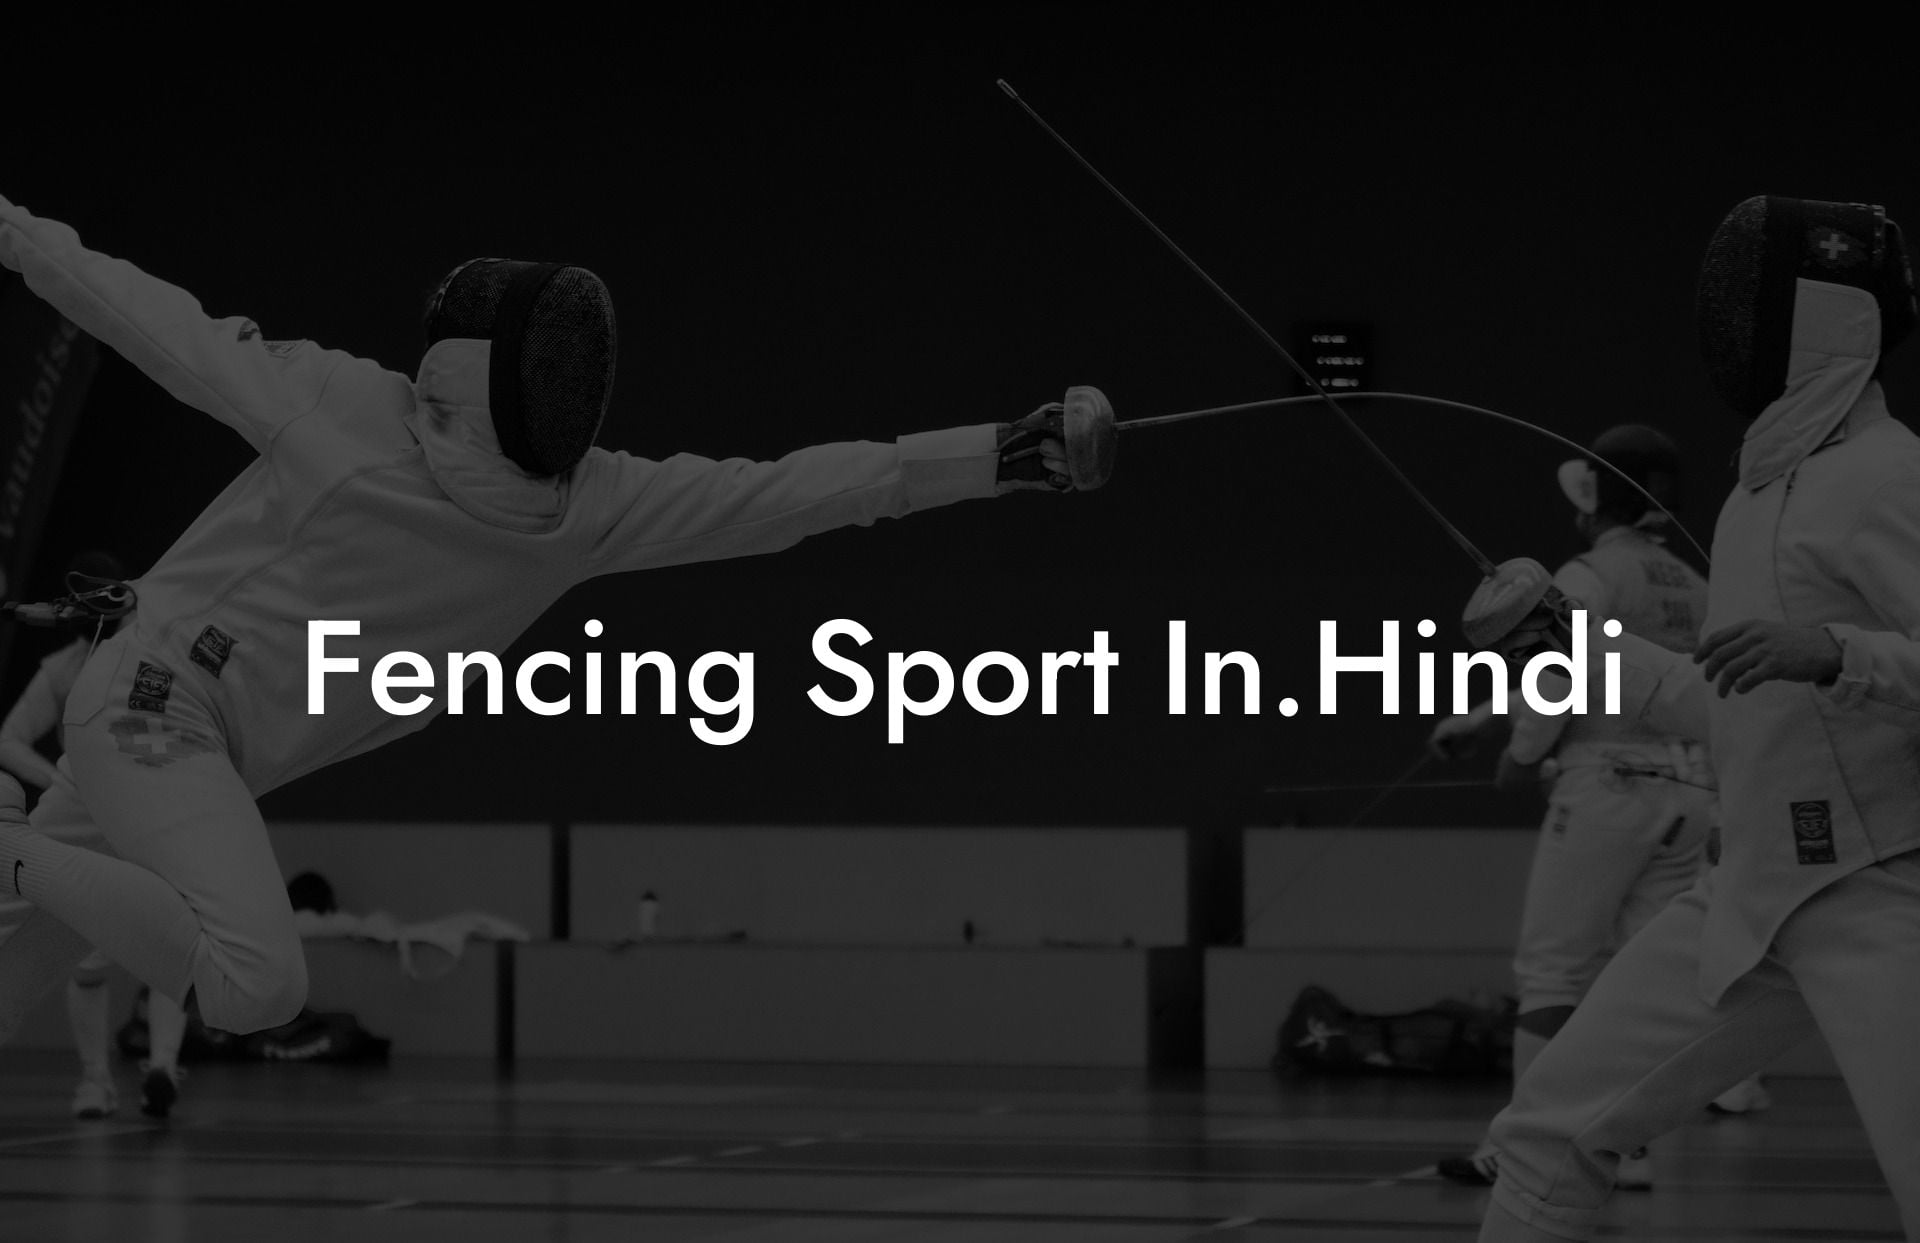 Fencing Sport In.Hindi